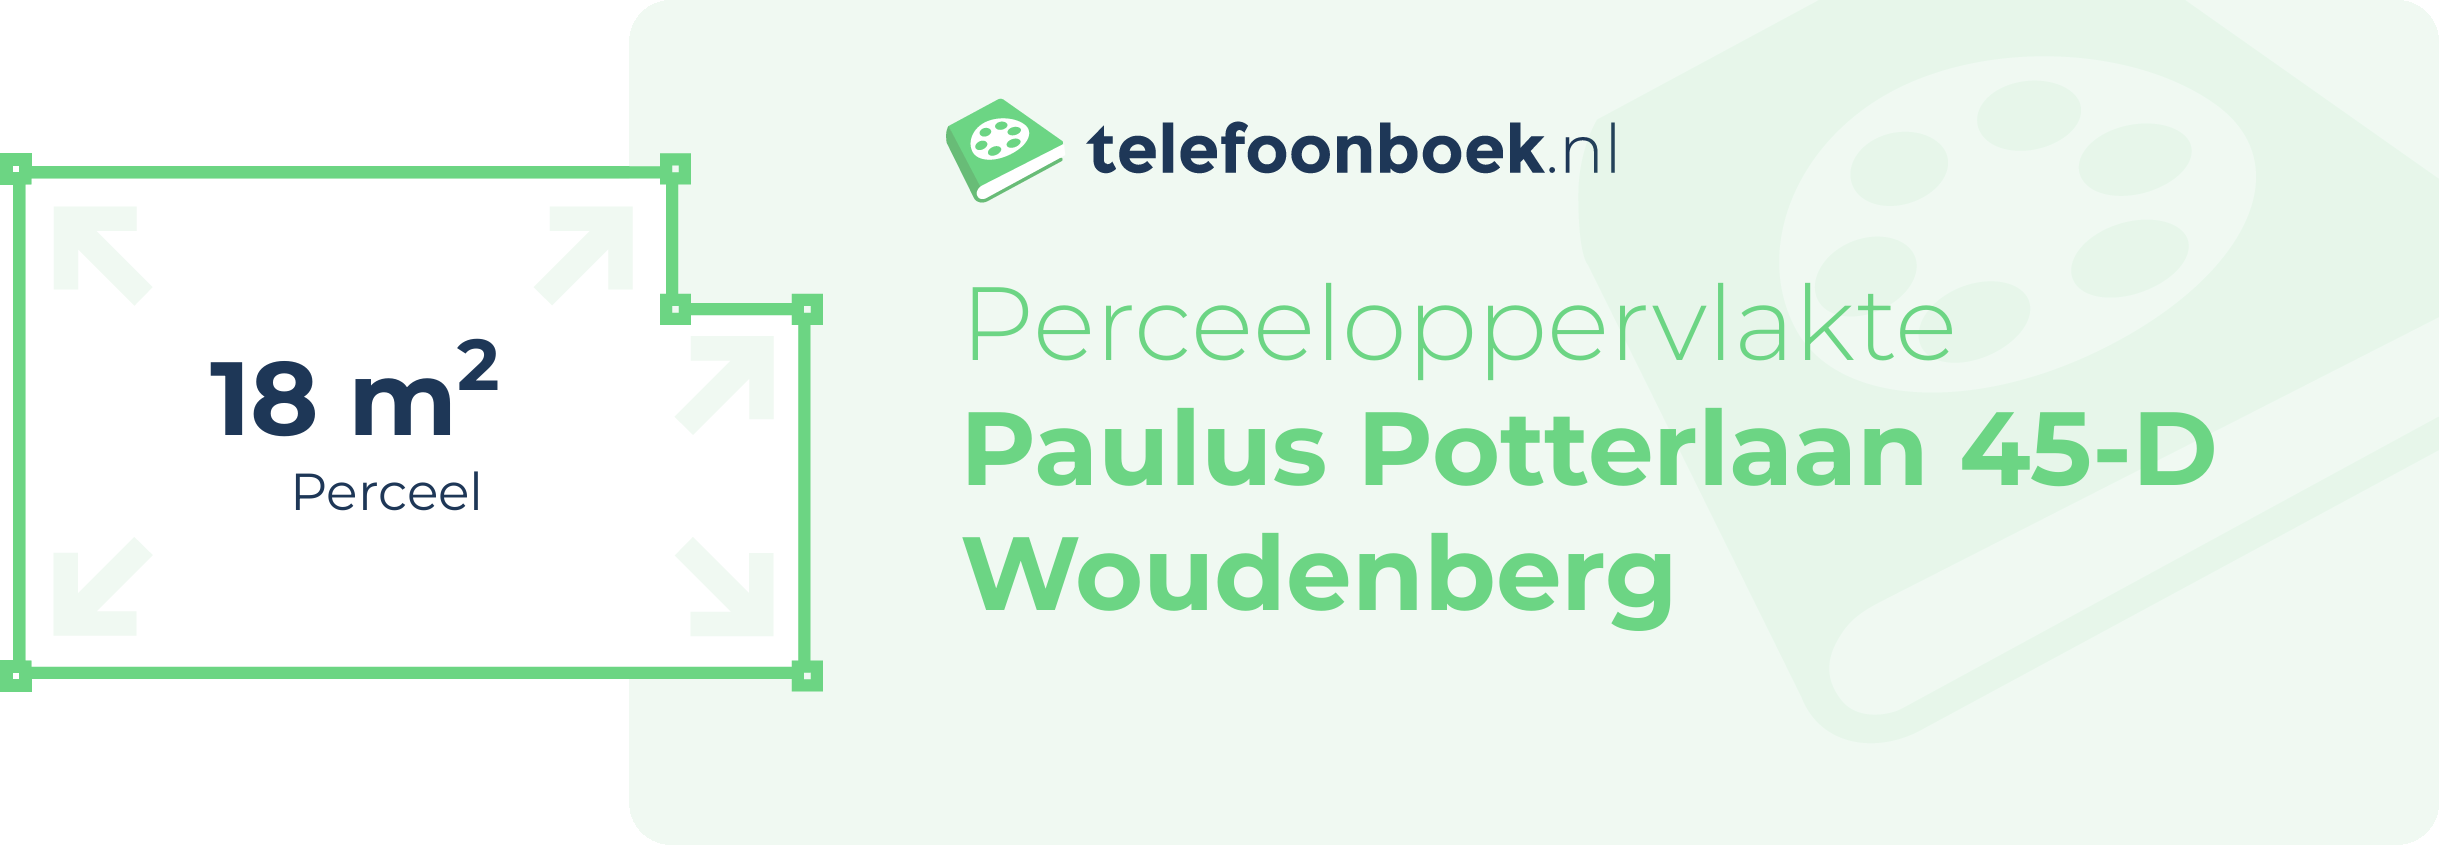 Perceeloppervlakte Paulus Potterlaan 45-D Woudenberg